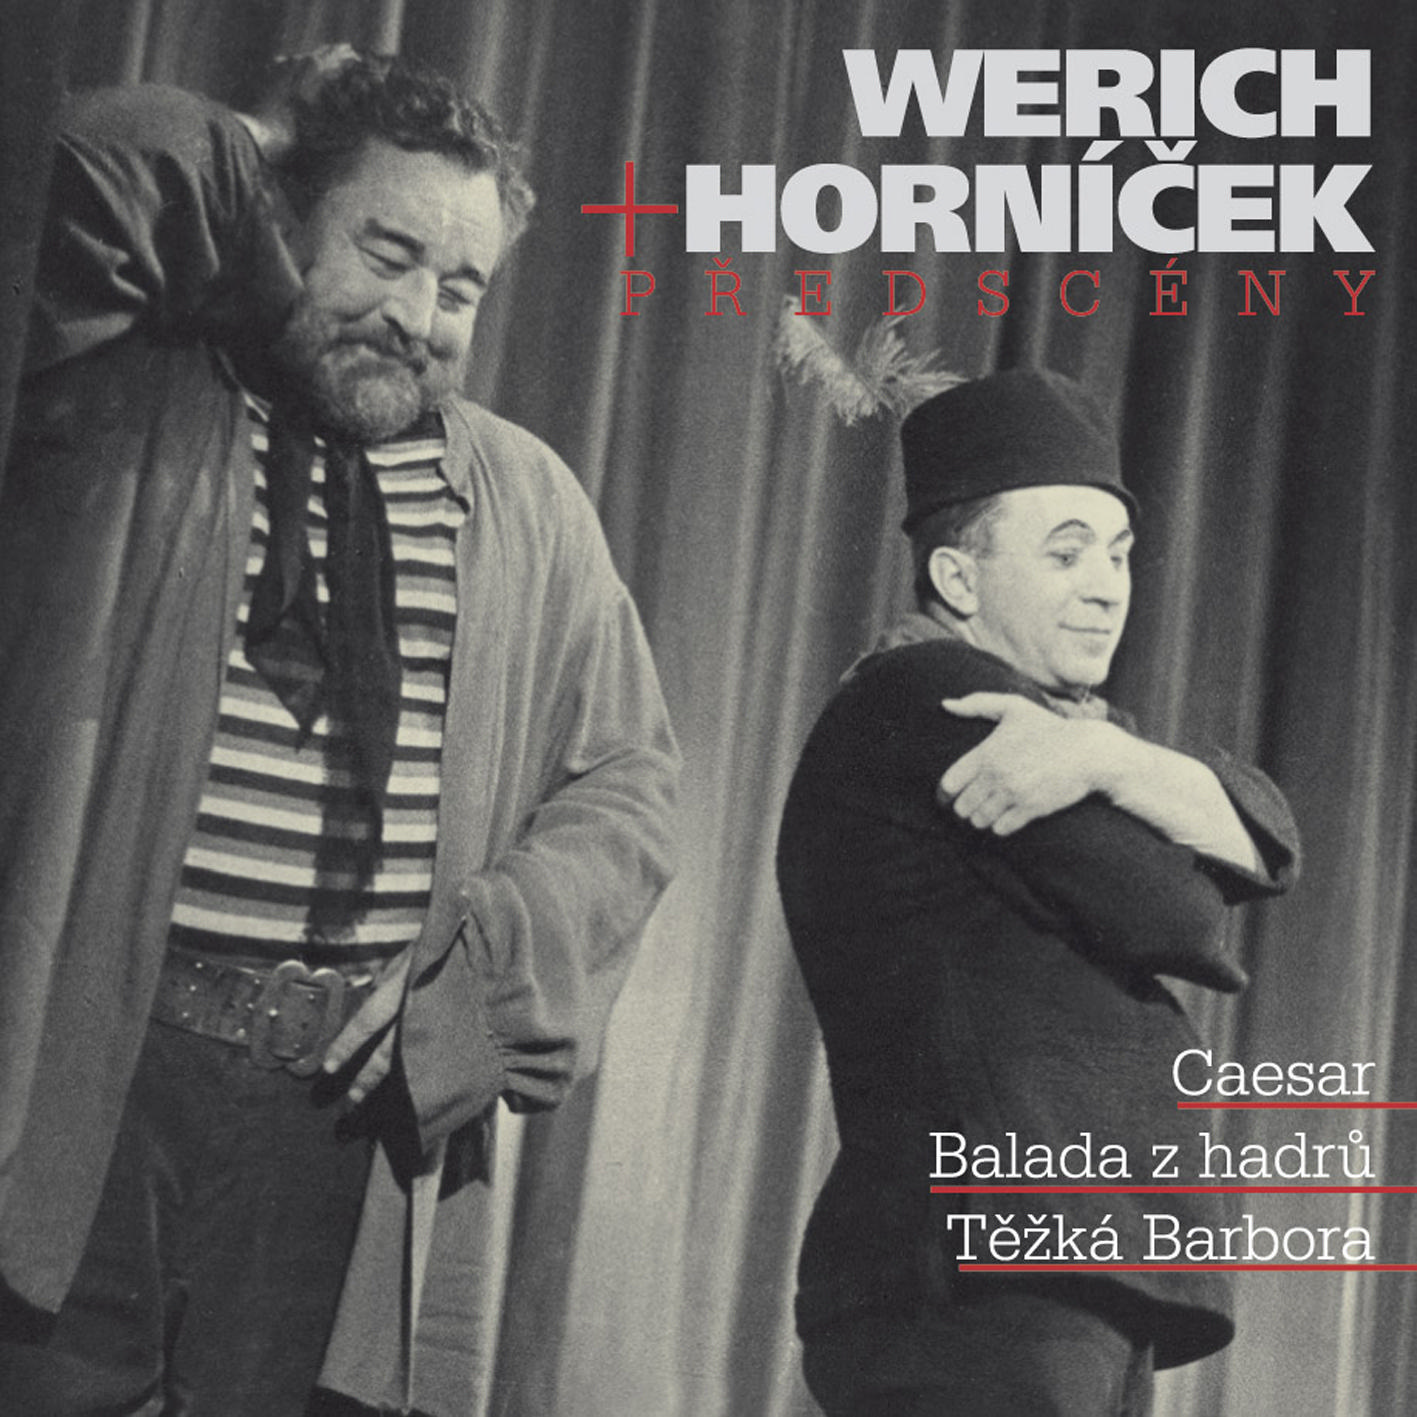 CD Shop - WERICH JAN, HORNICEK MIROSLAV PREDSCENY (2CD)